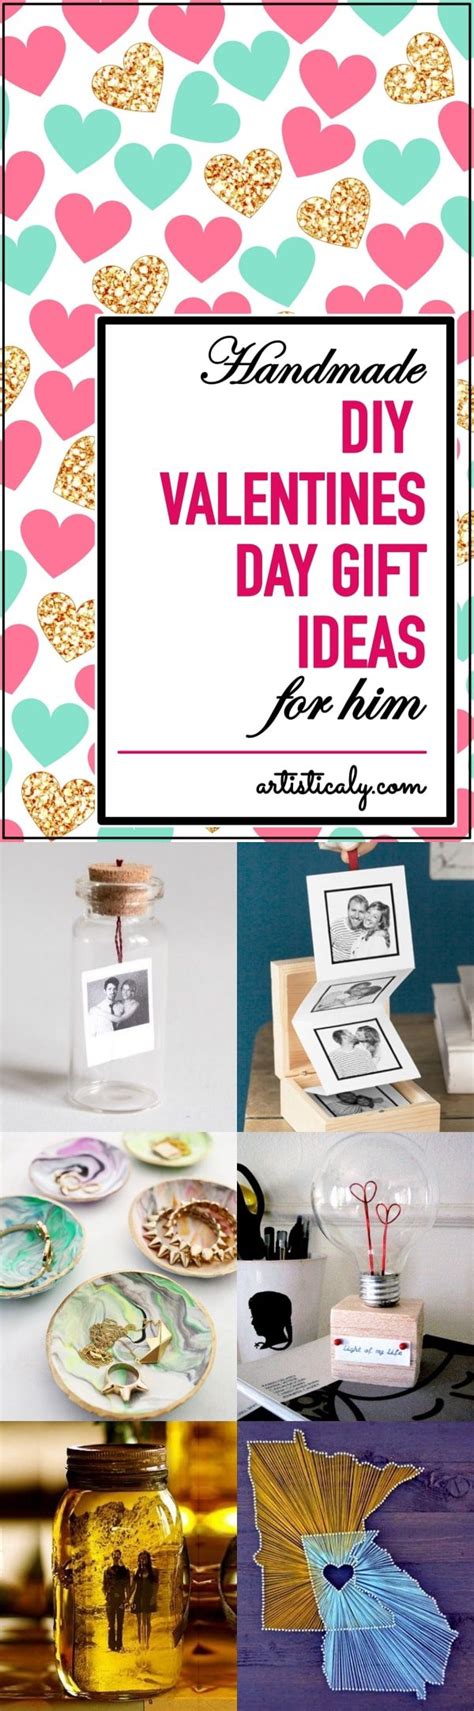 Handmade Diy Valentine S Day Gift Ideas For Him Artisticaly